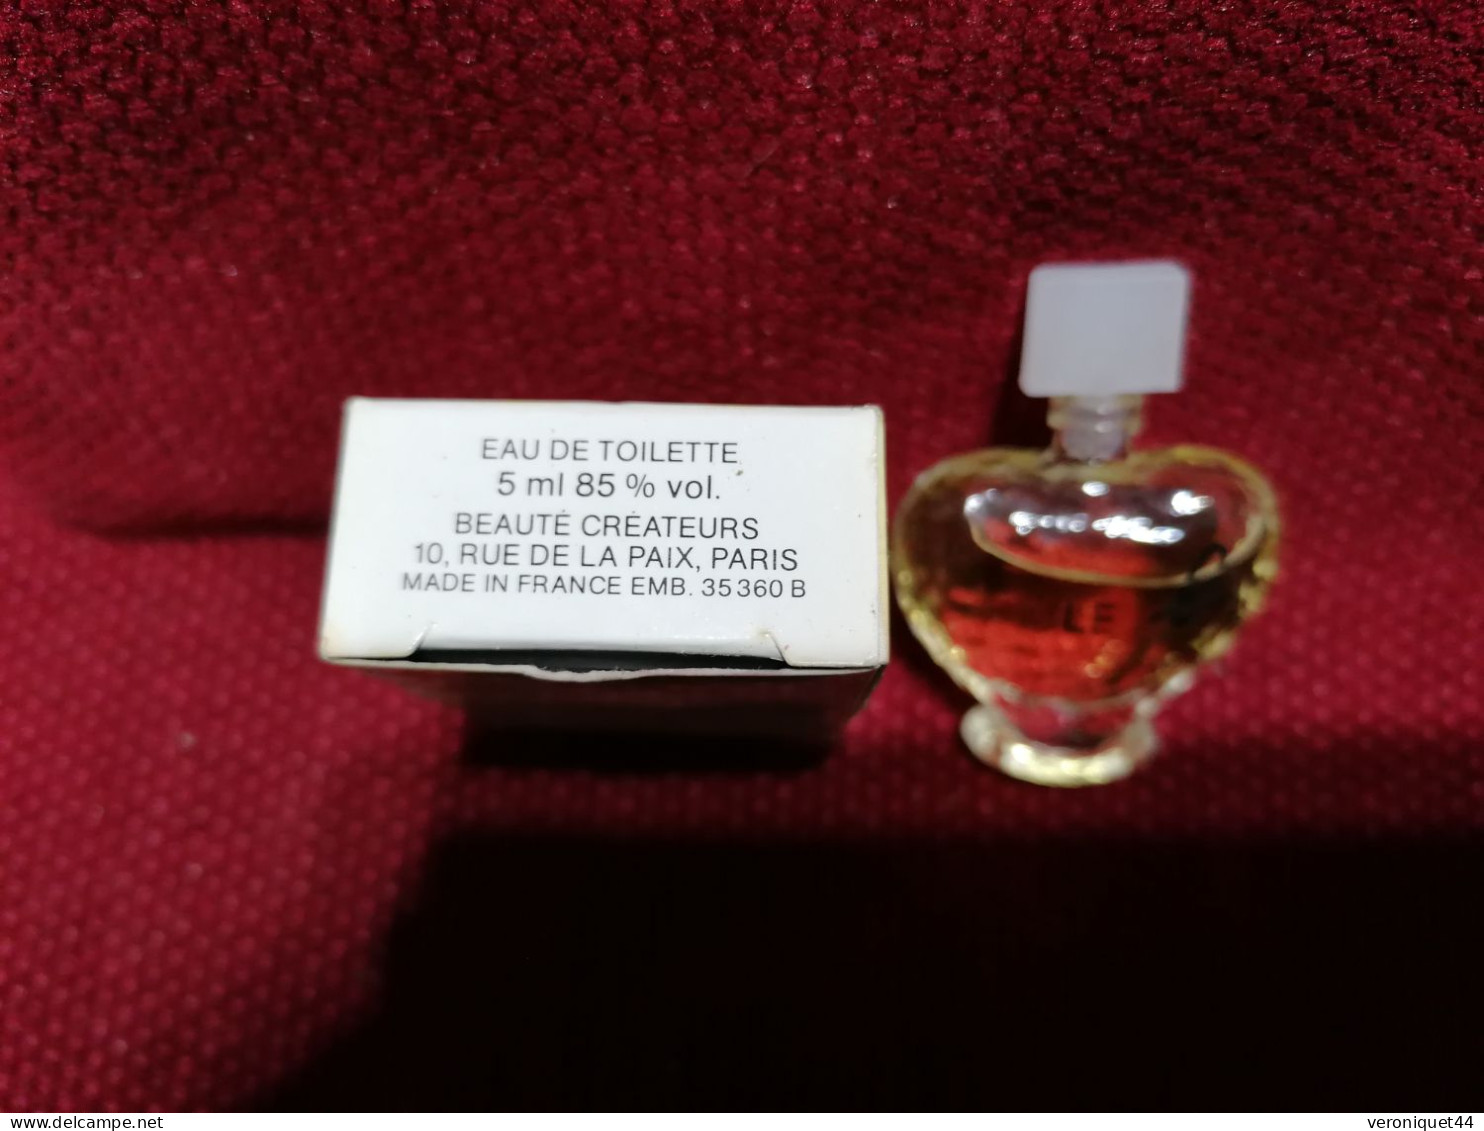 Le B. Agnès B. EDT Miniature 5 ML - Miniatures Womens' Fragrances (in Box)